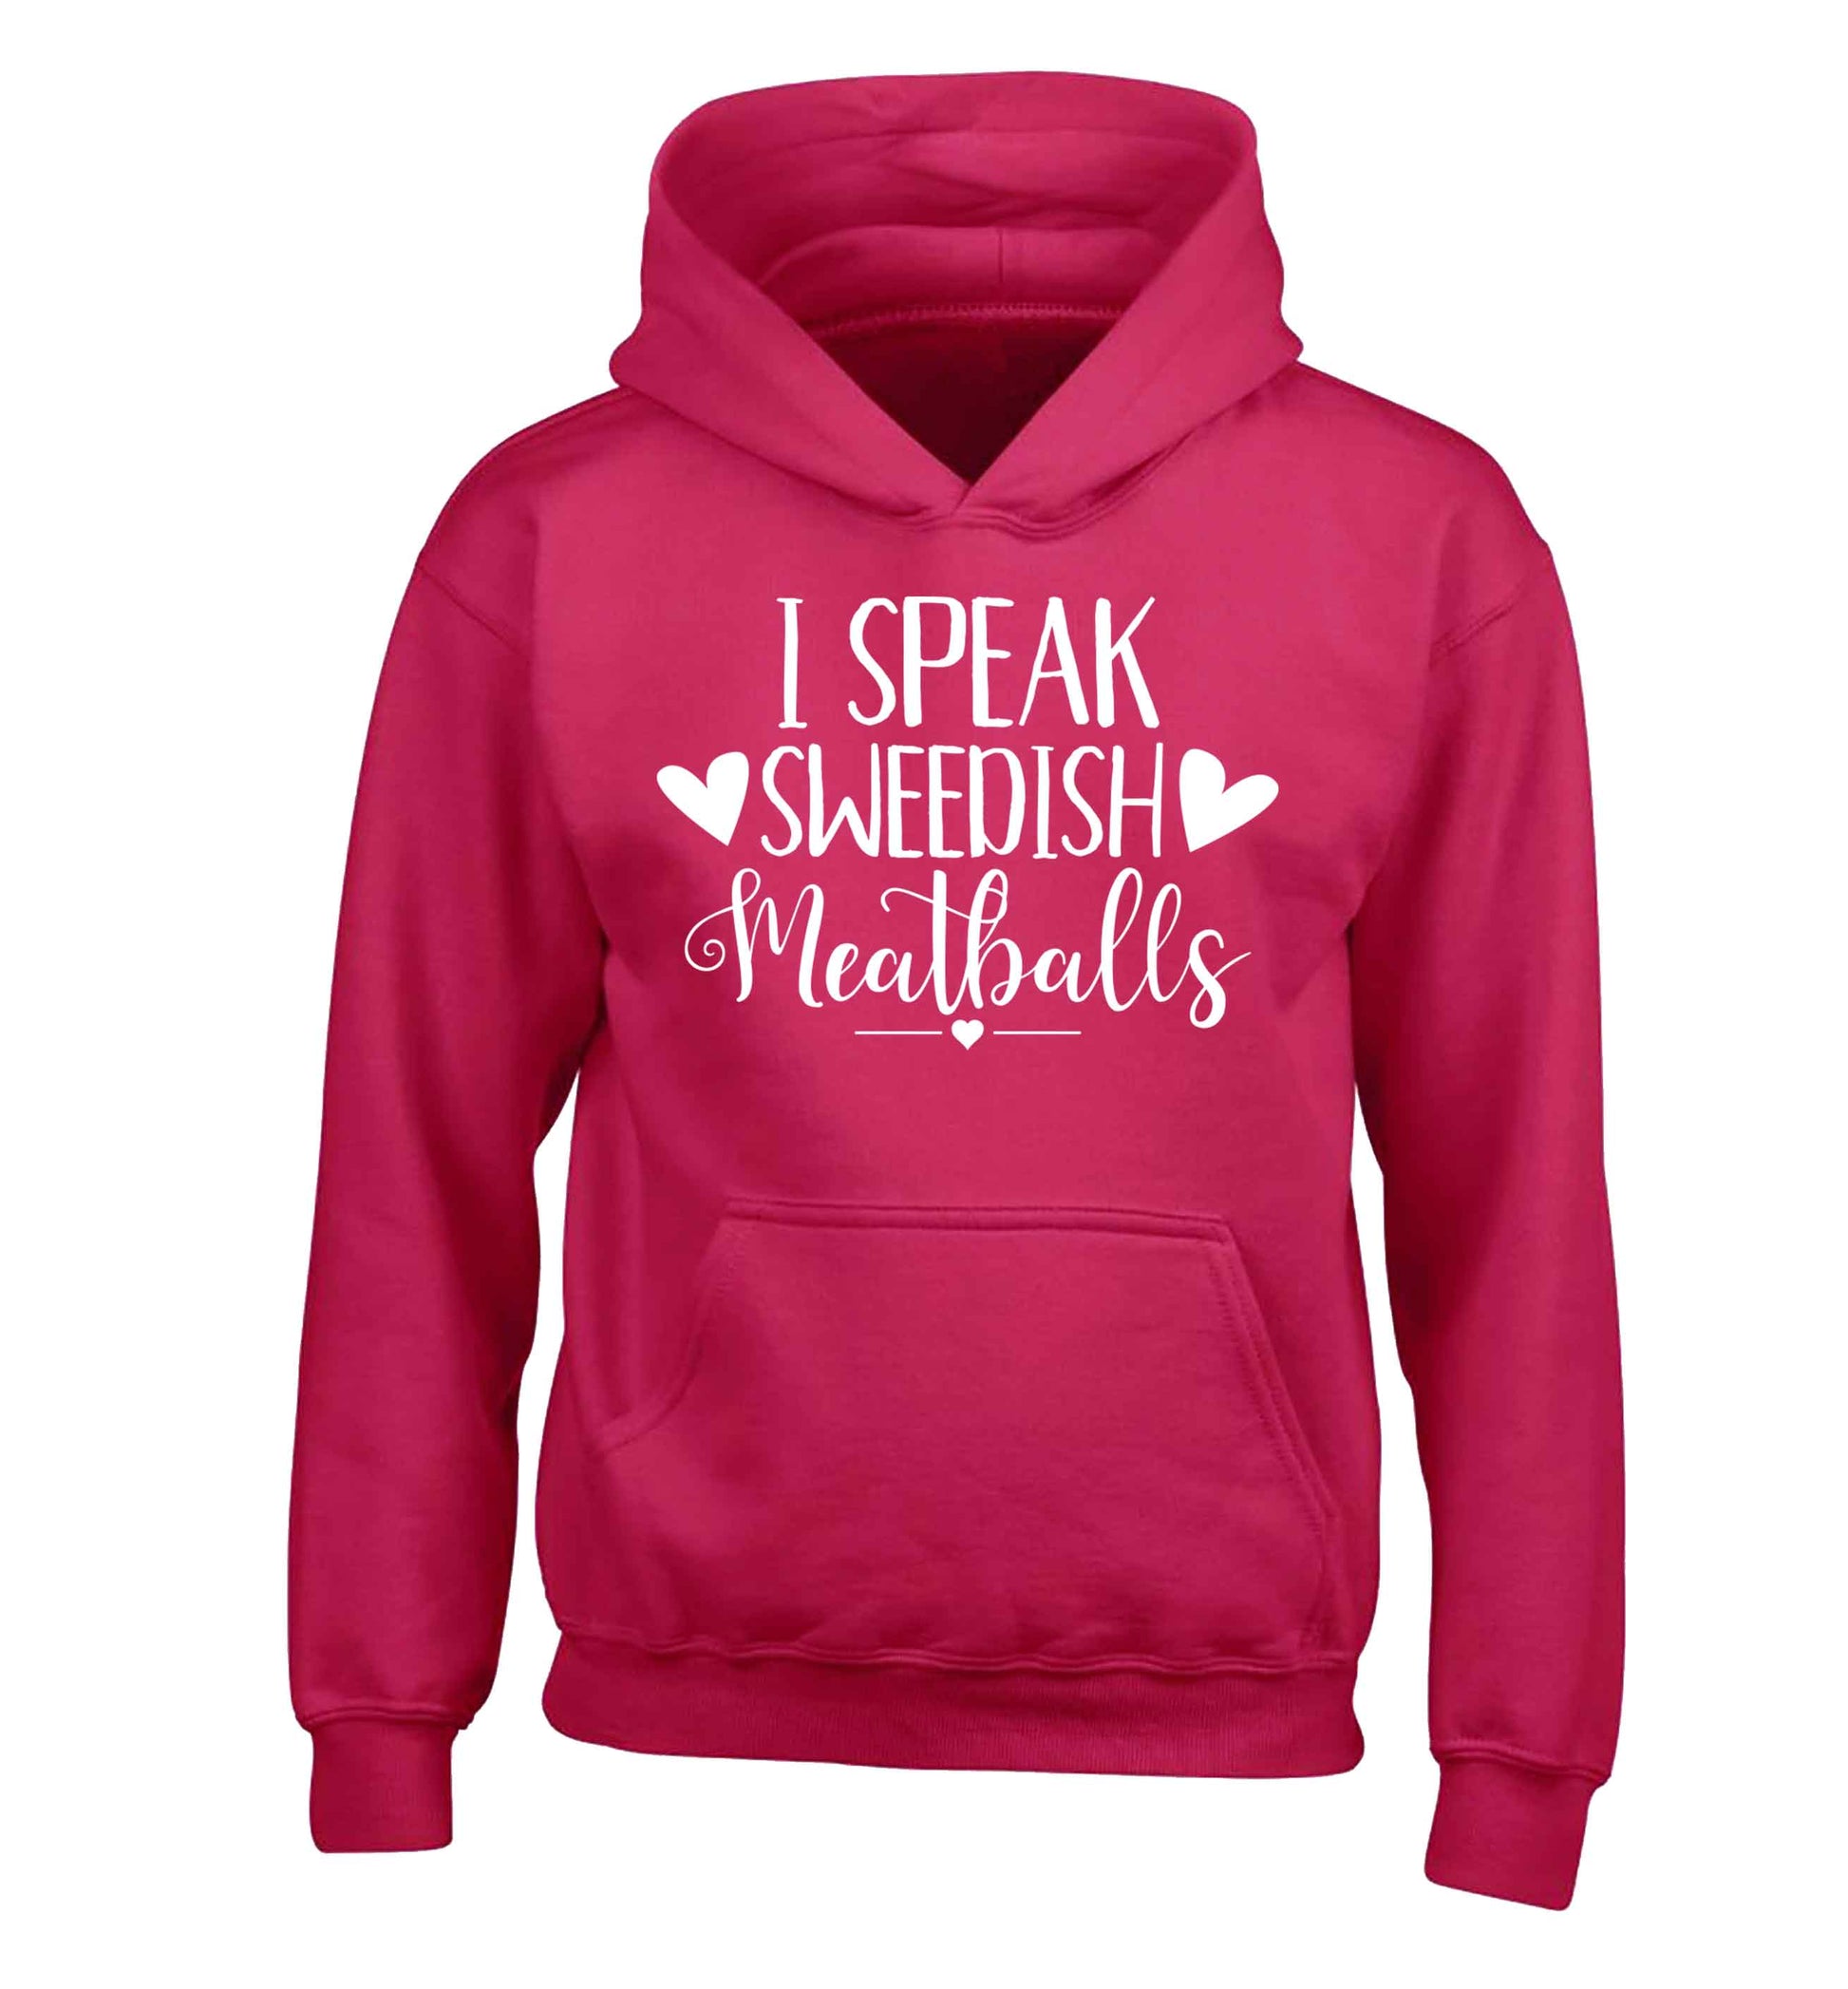 I speak sweedish...meatballs children's pink hoodie 12-13 Years